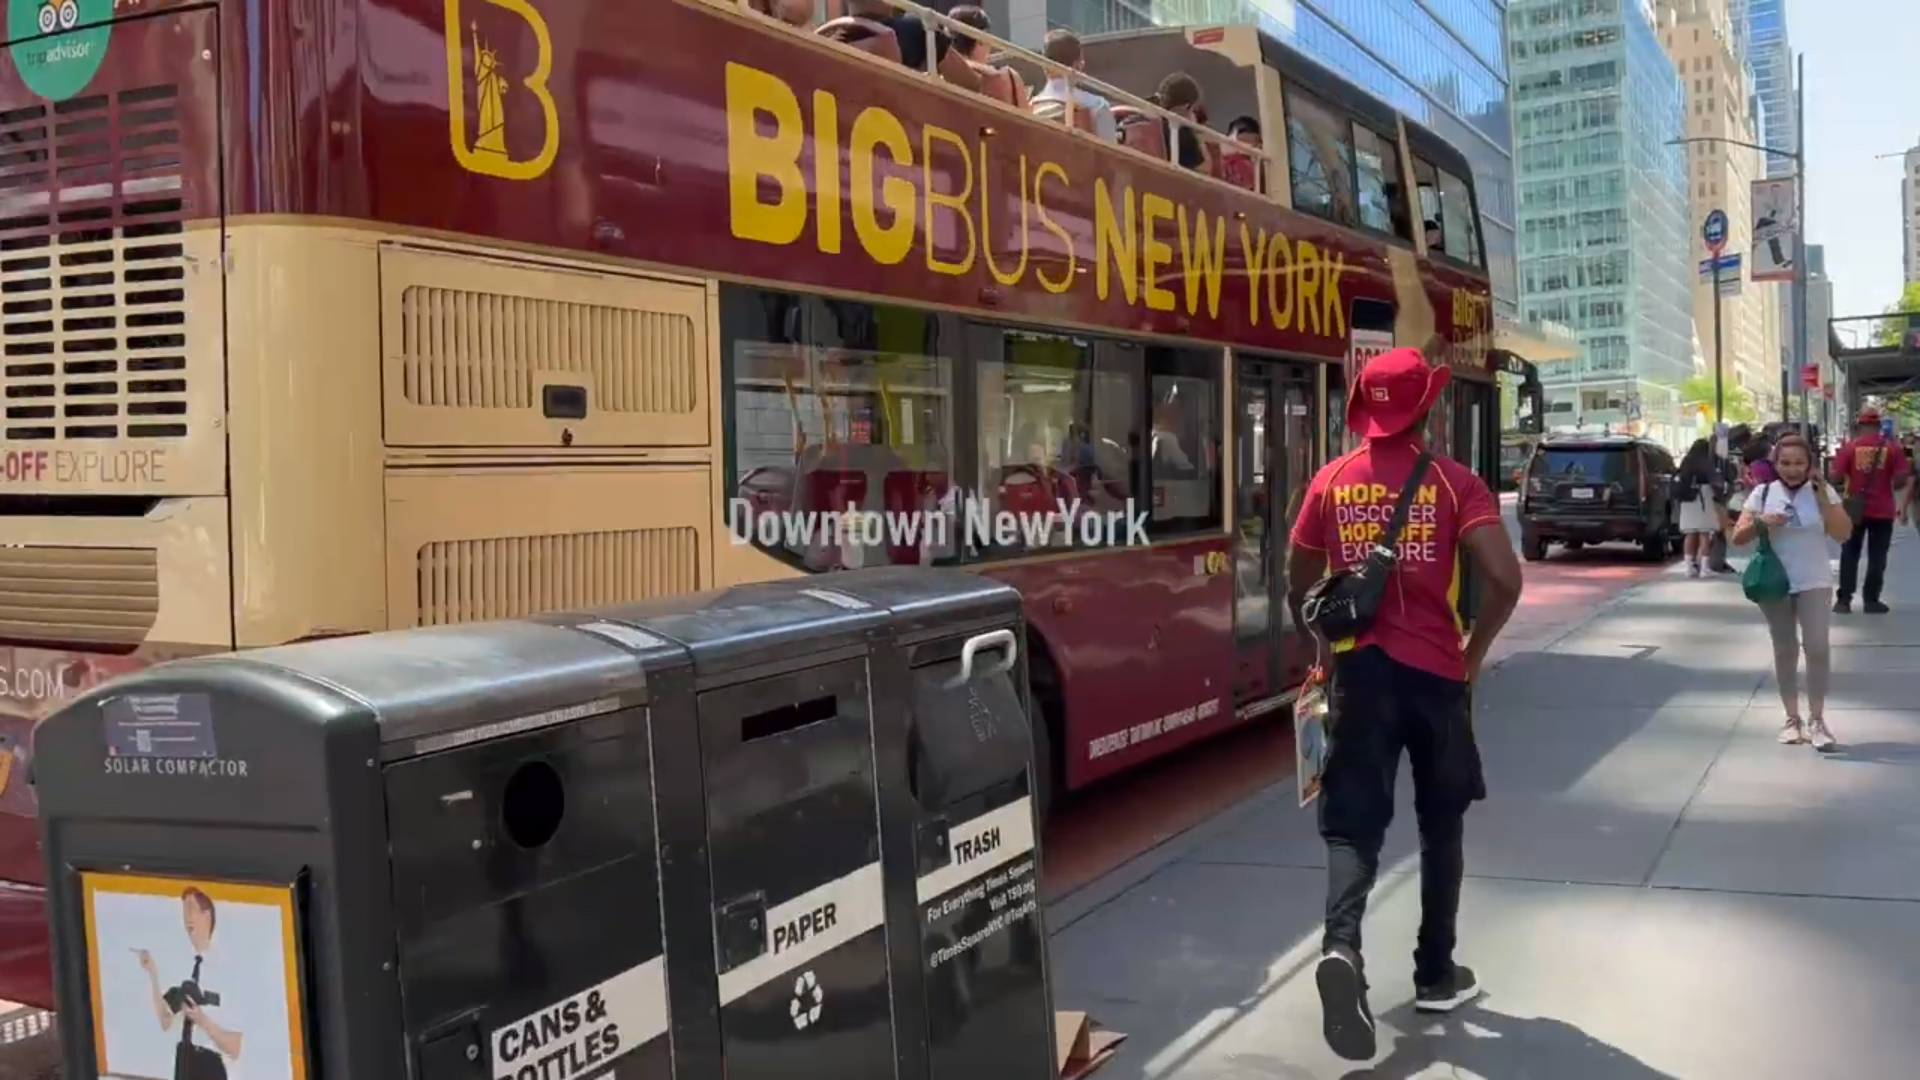 big bus new york